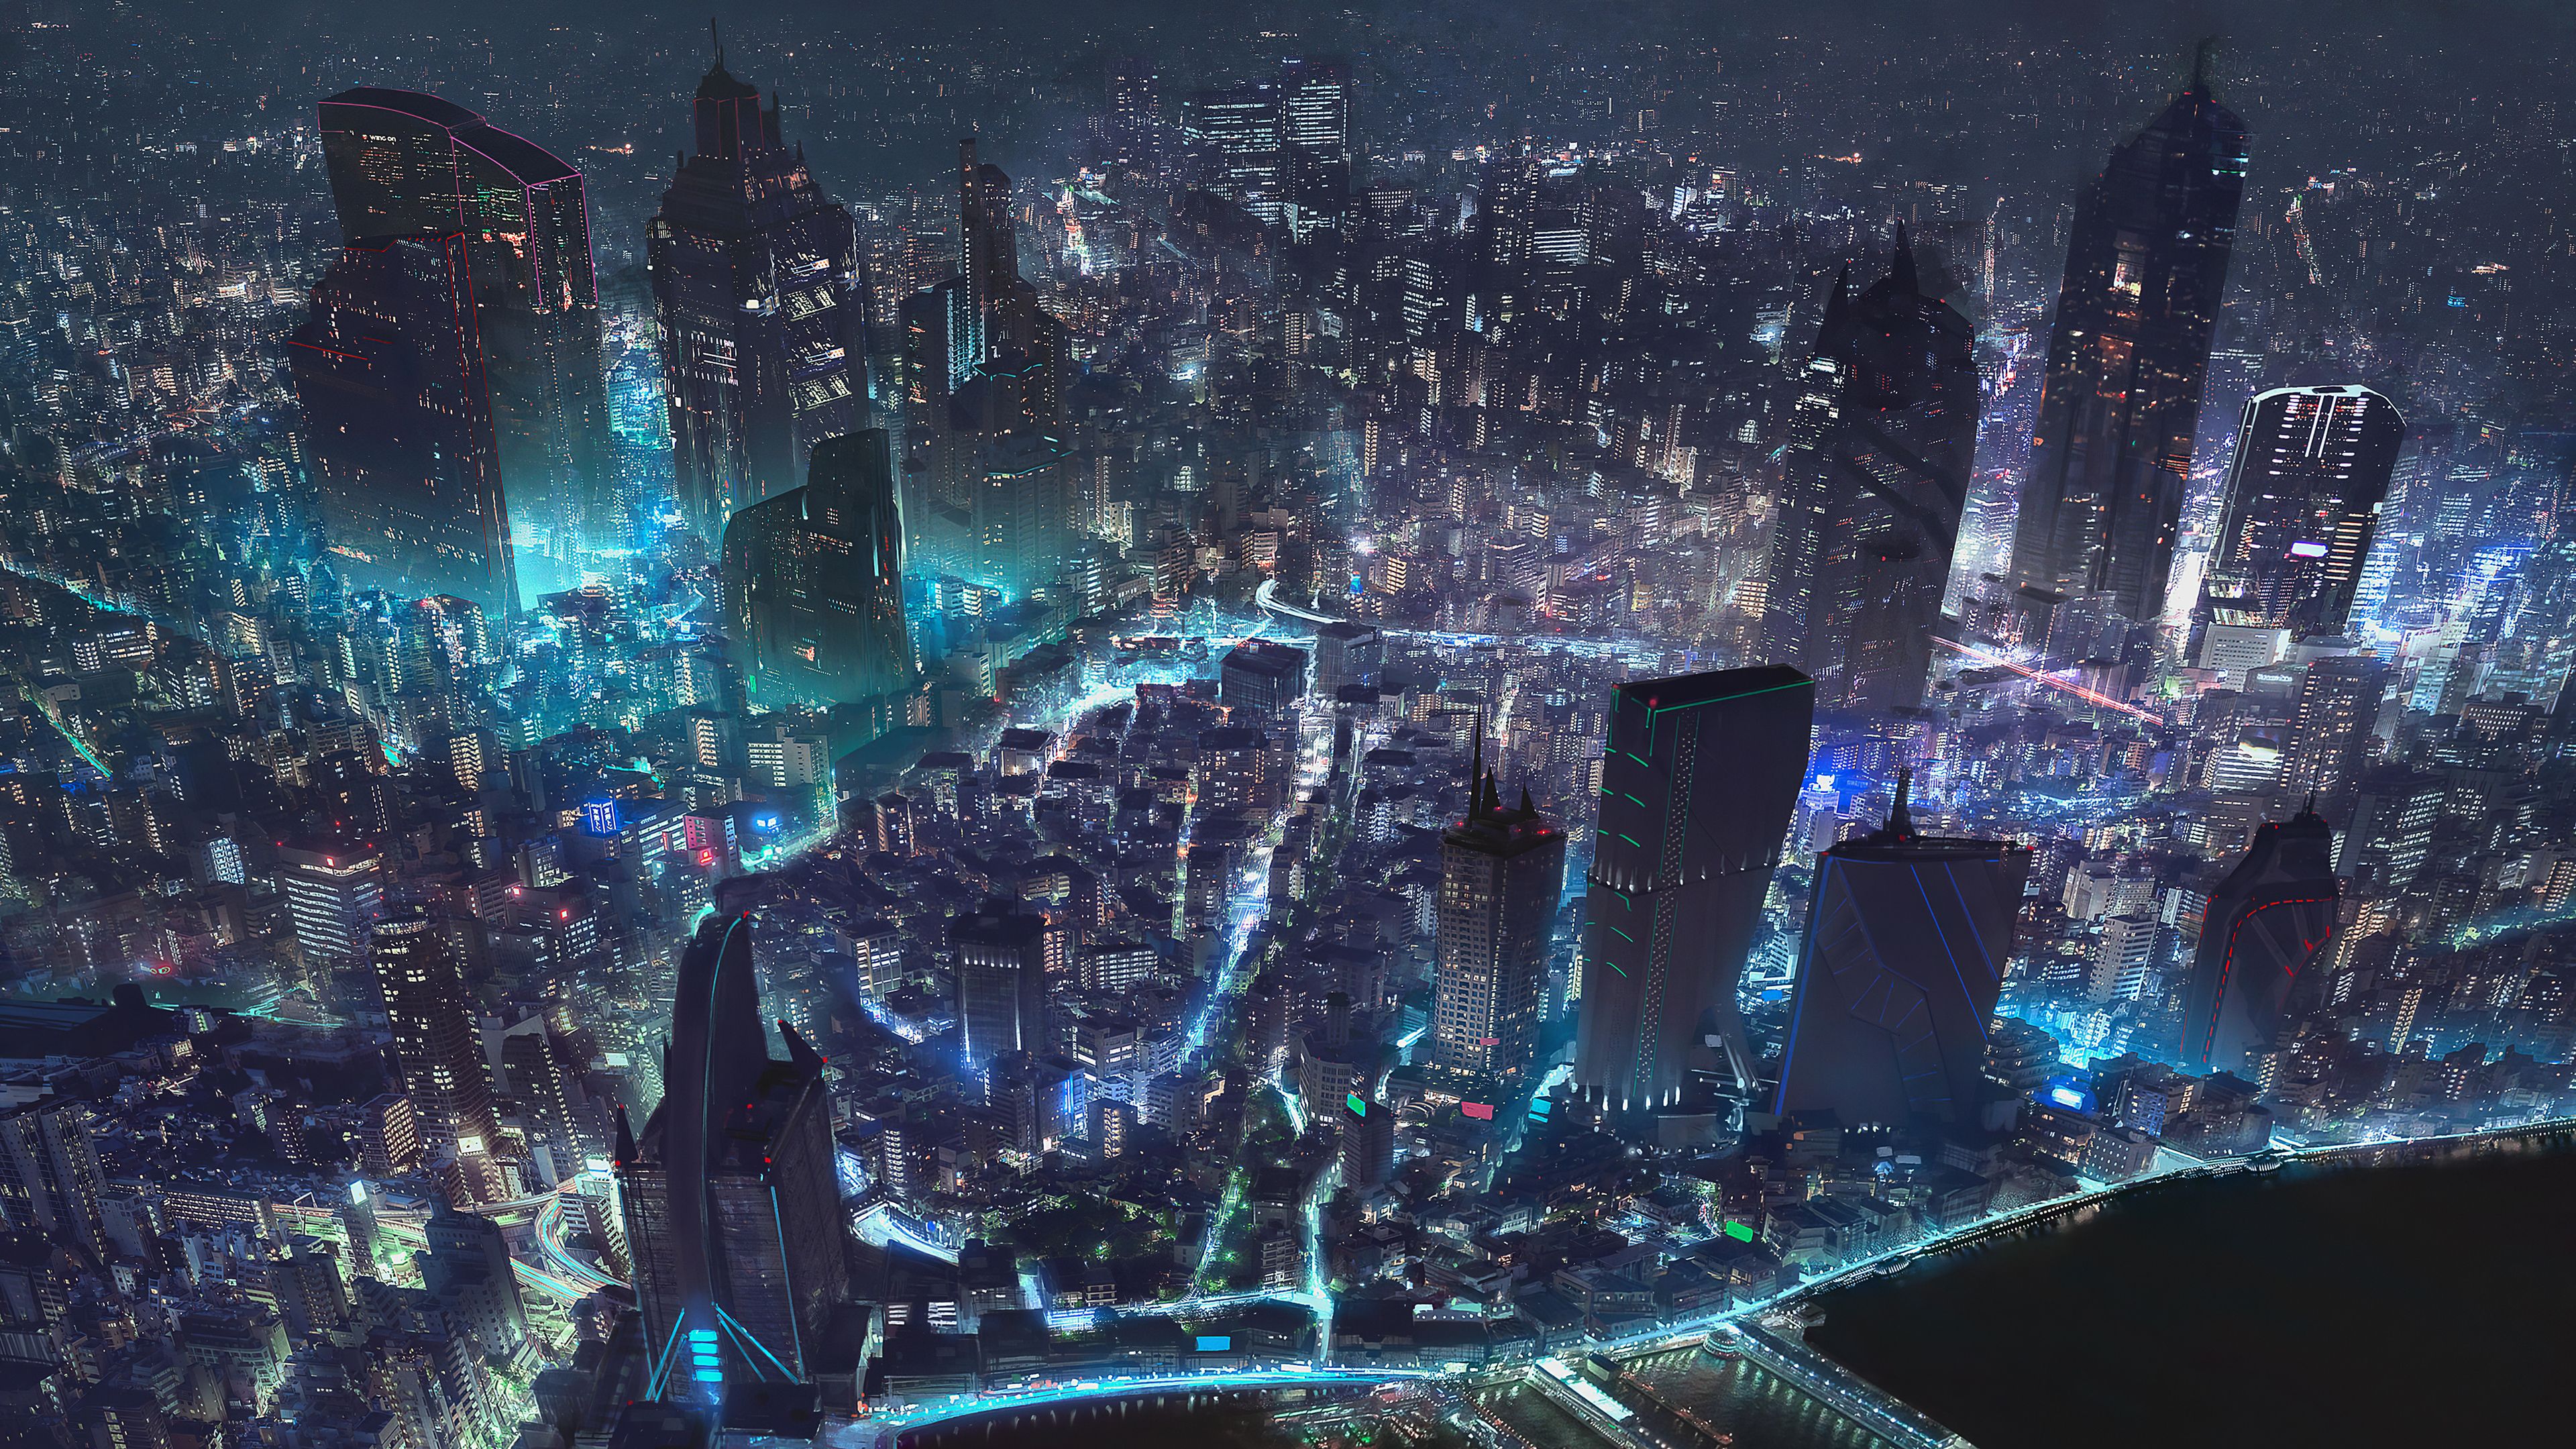 Cyberpunk City World Map 4k, HD Artist, 4k Wallpaper, Image, Background, Photo and Picture